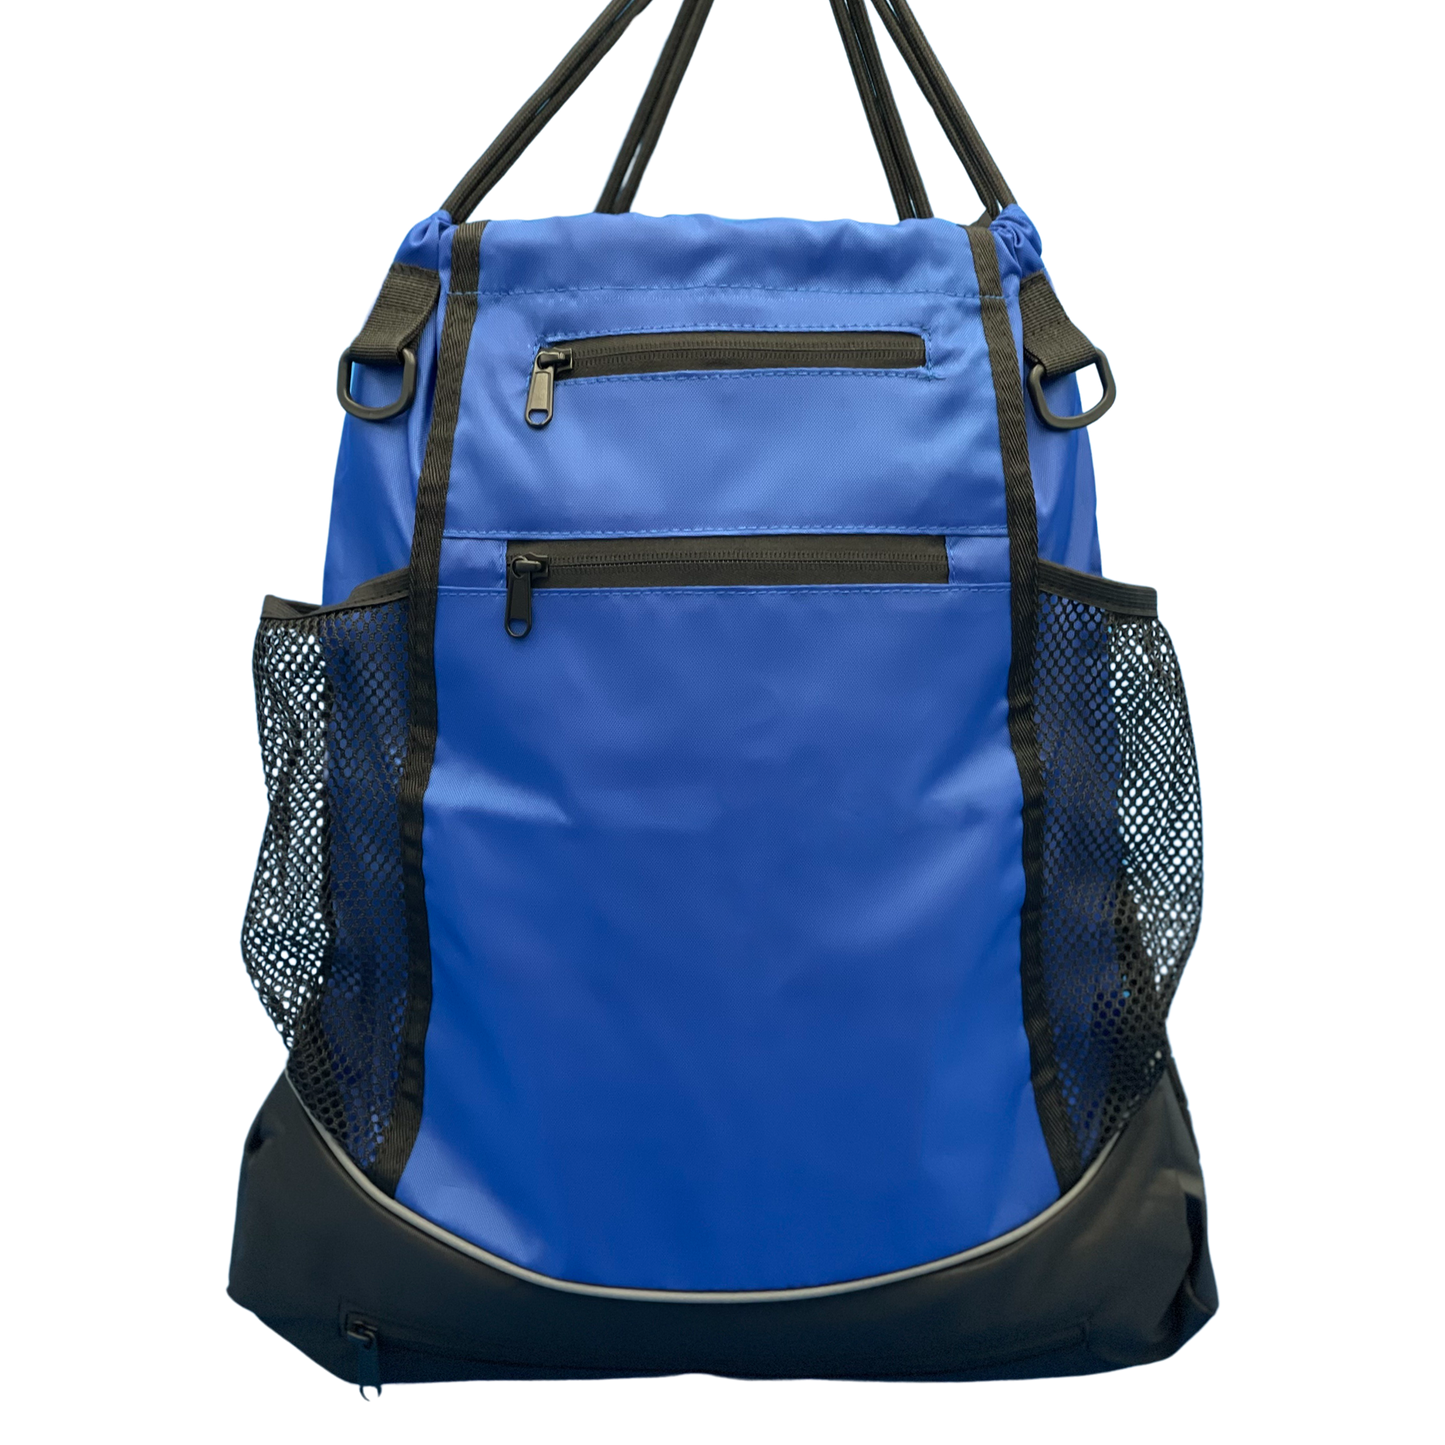 Custom Drawstring Backpack